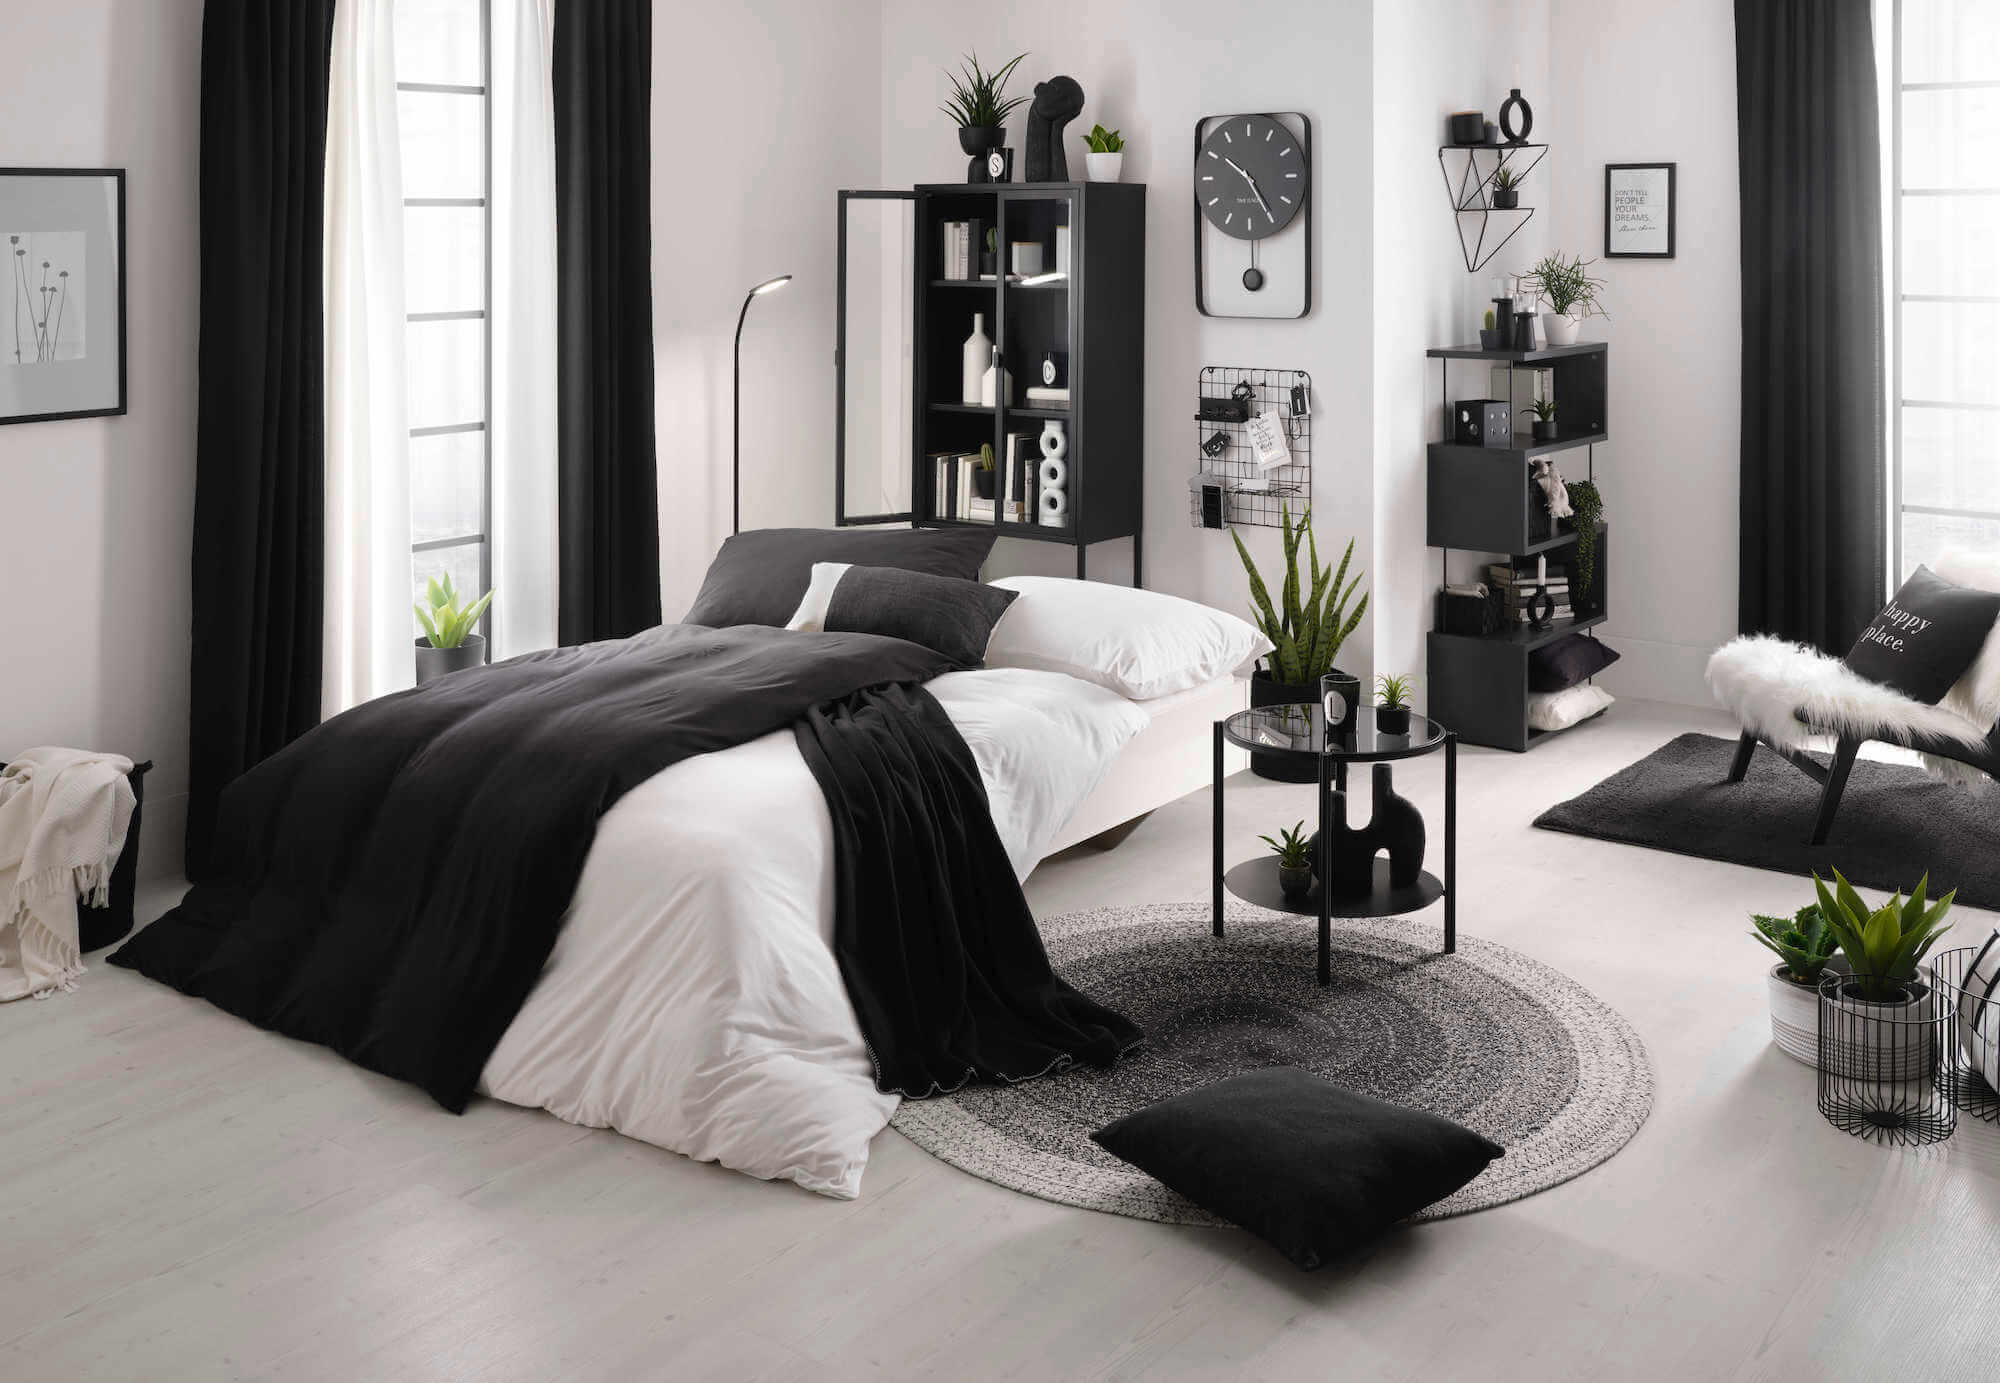 Mobelix, čierno-biely interiér, spálňa